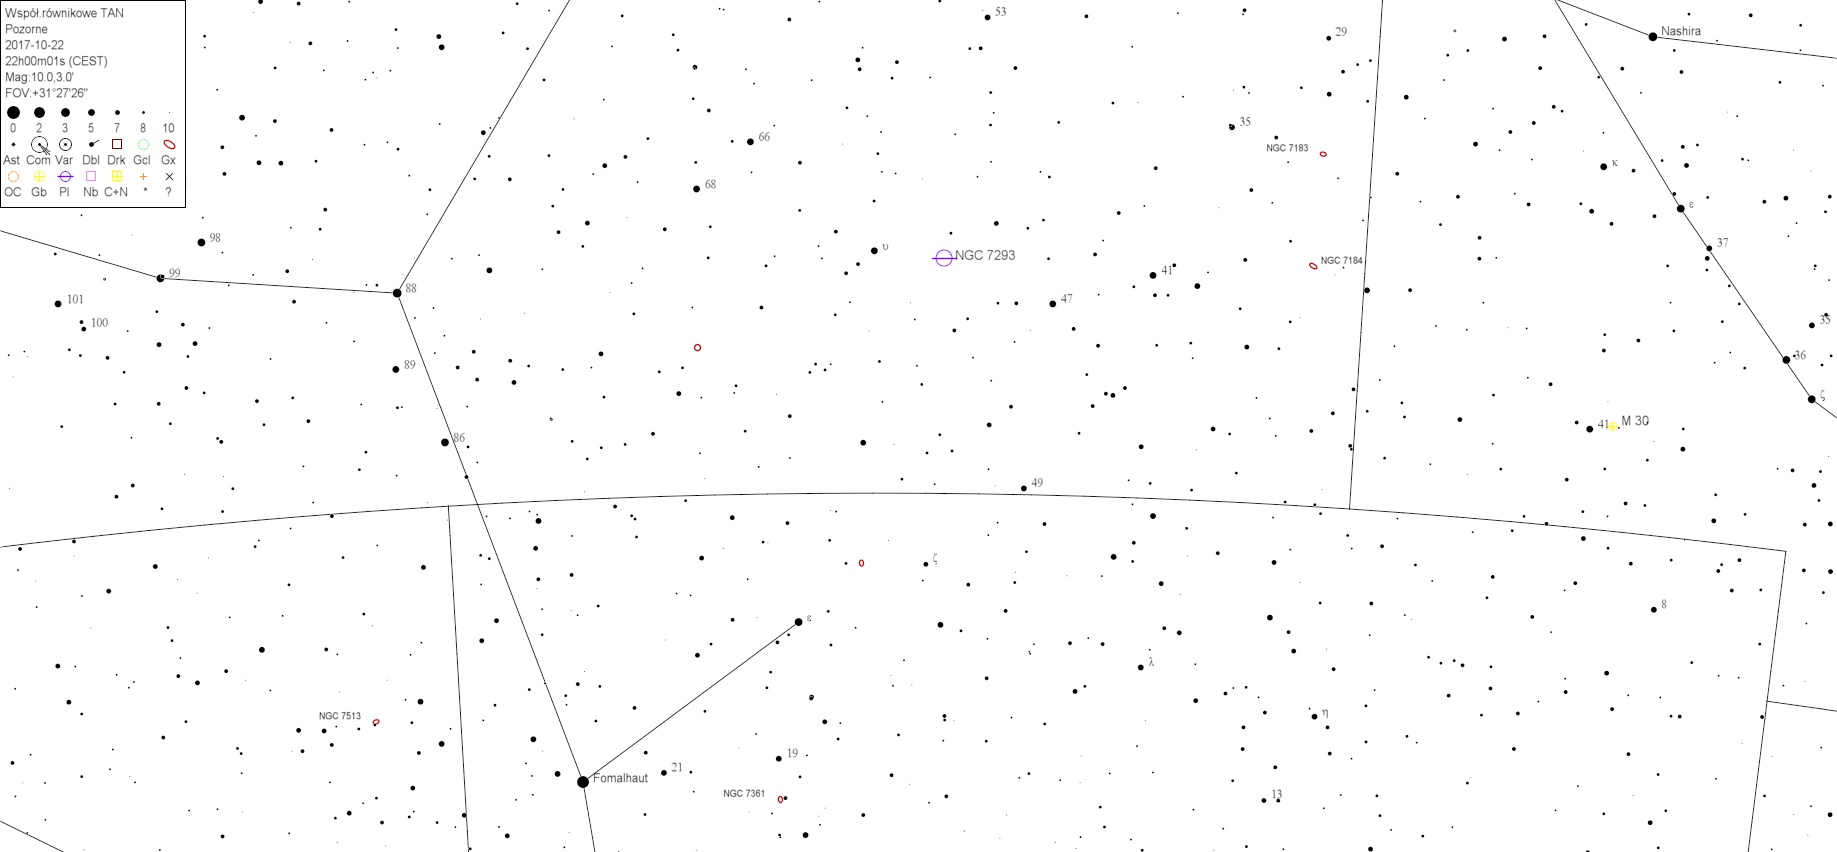 NGC 7293.jpg